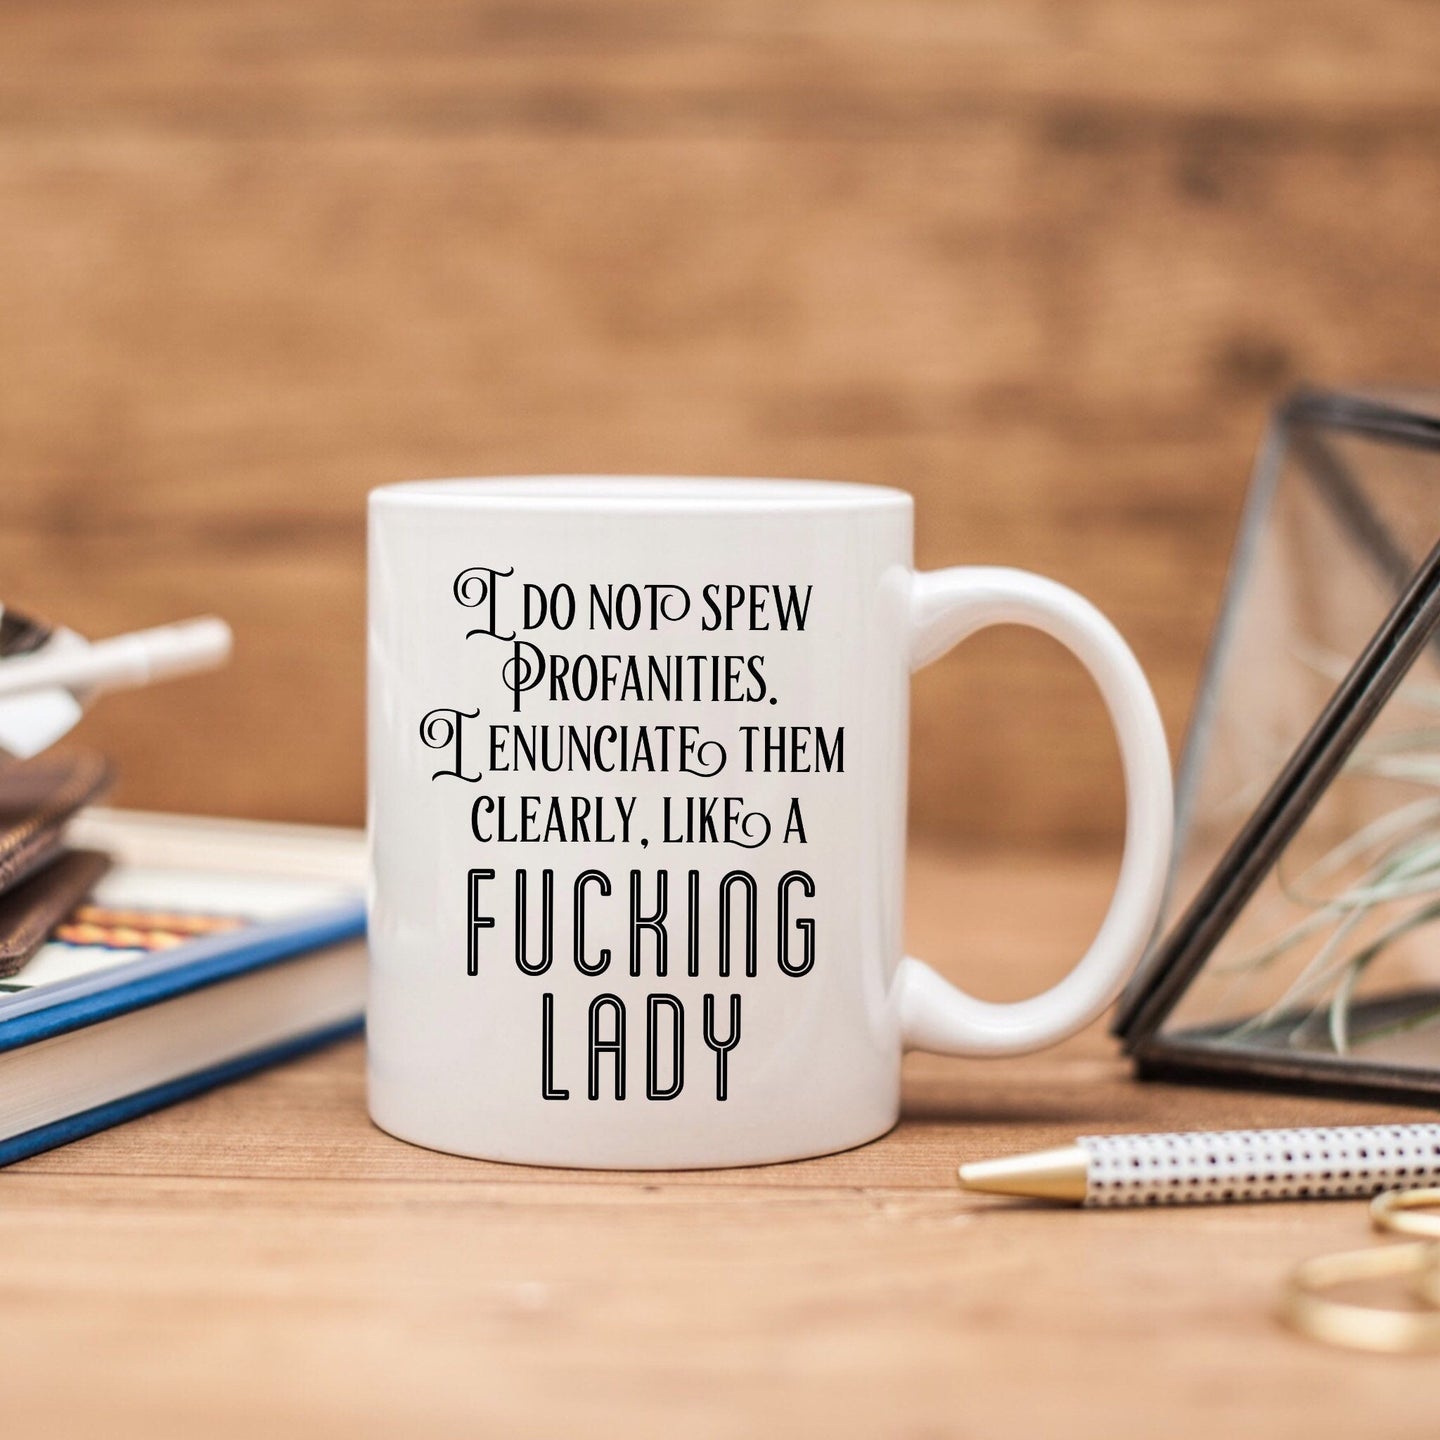 I do not spew profanities. I enunciate them clearly, like a fucking lady